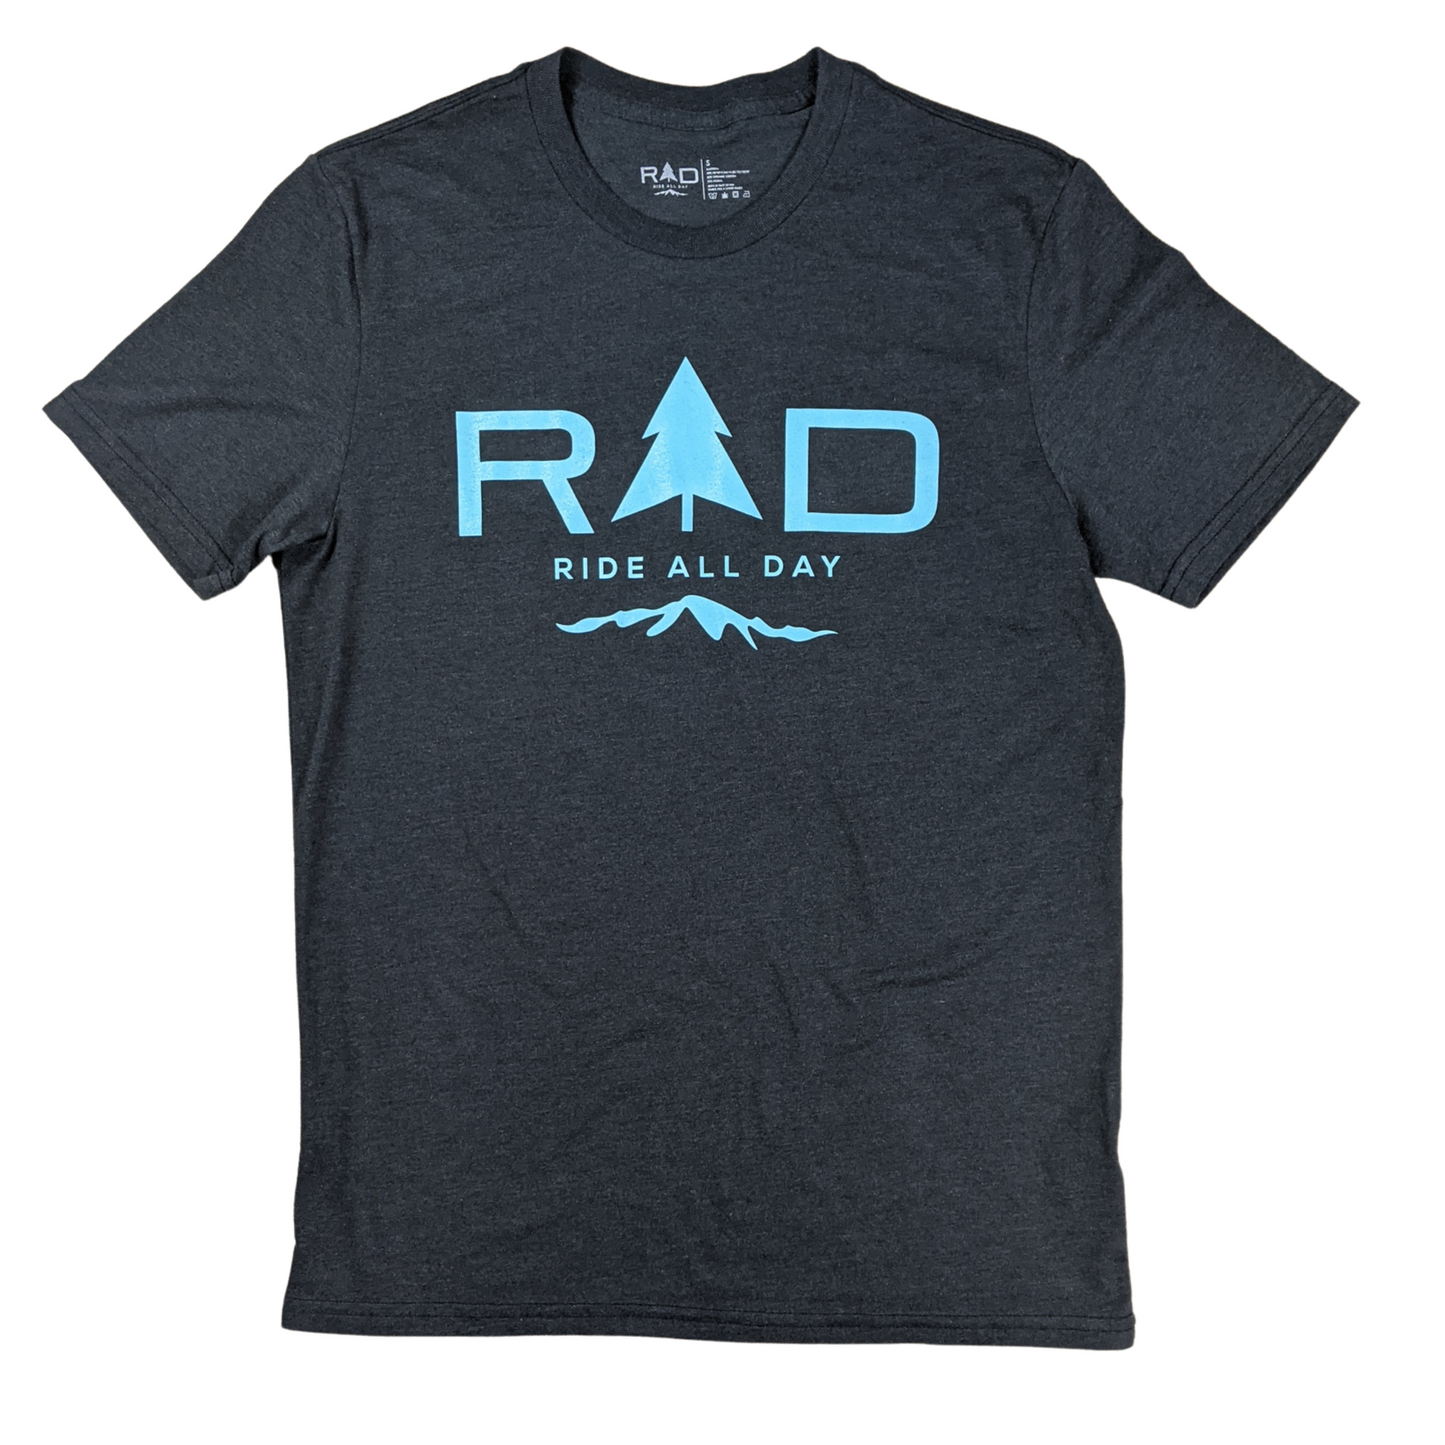 RAD classic logo tech tee in turquoise